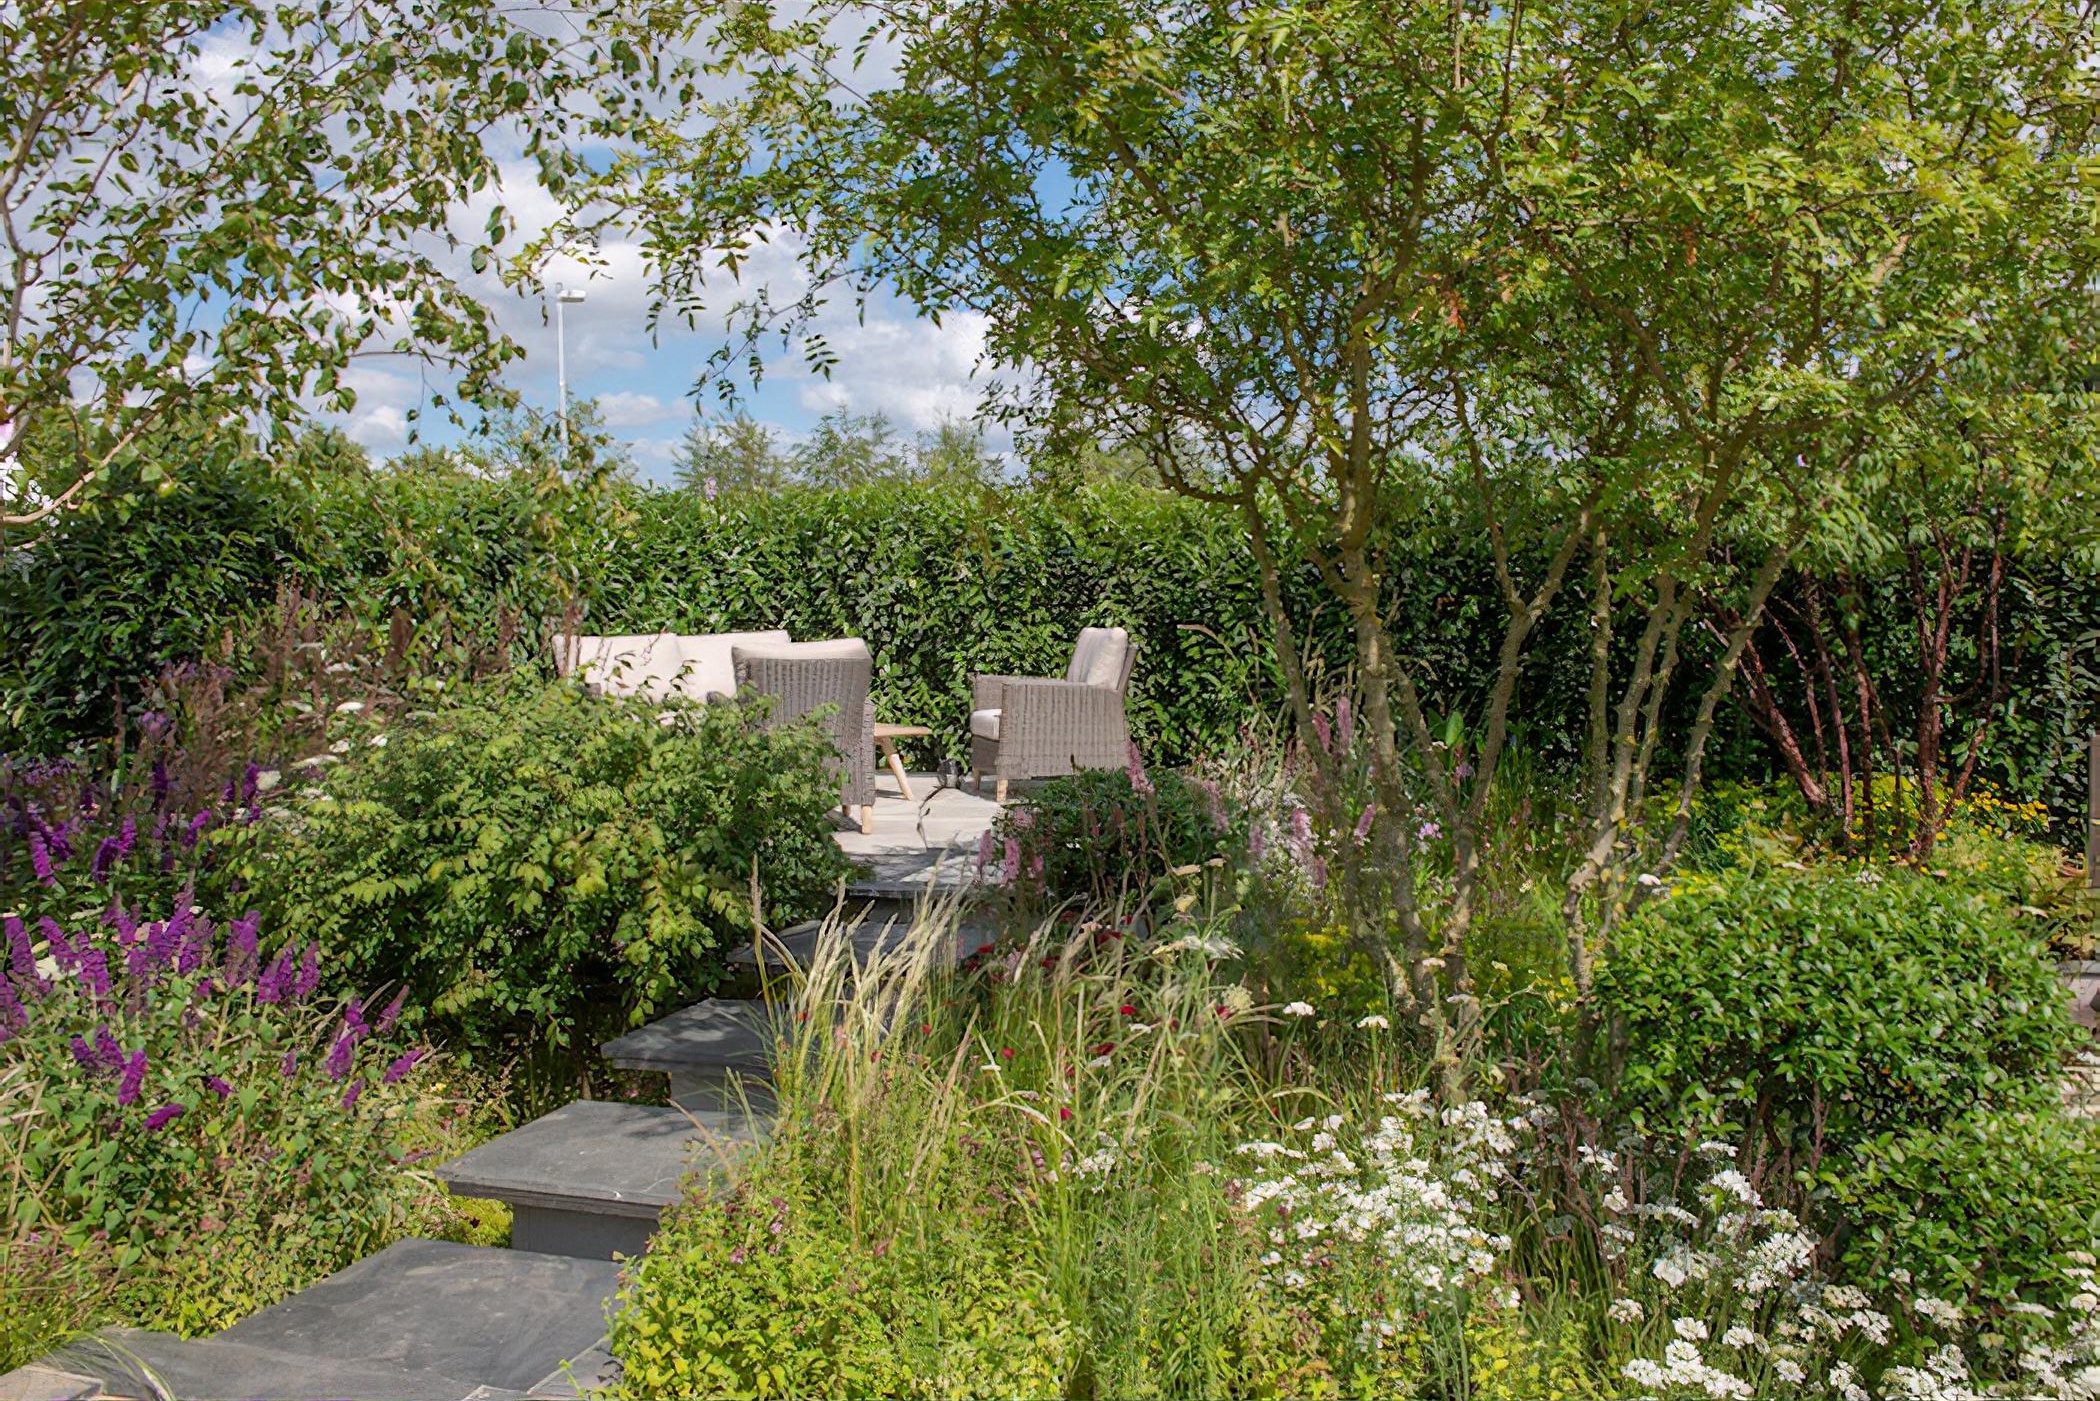 APL - A Place to Meet Garden Hampton Court Flower Show 2019 designed by Cherry Carmen Garden Design